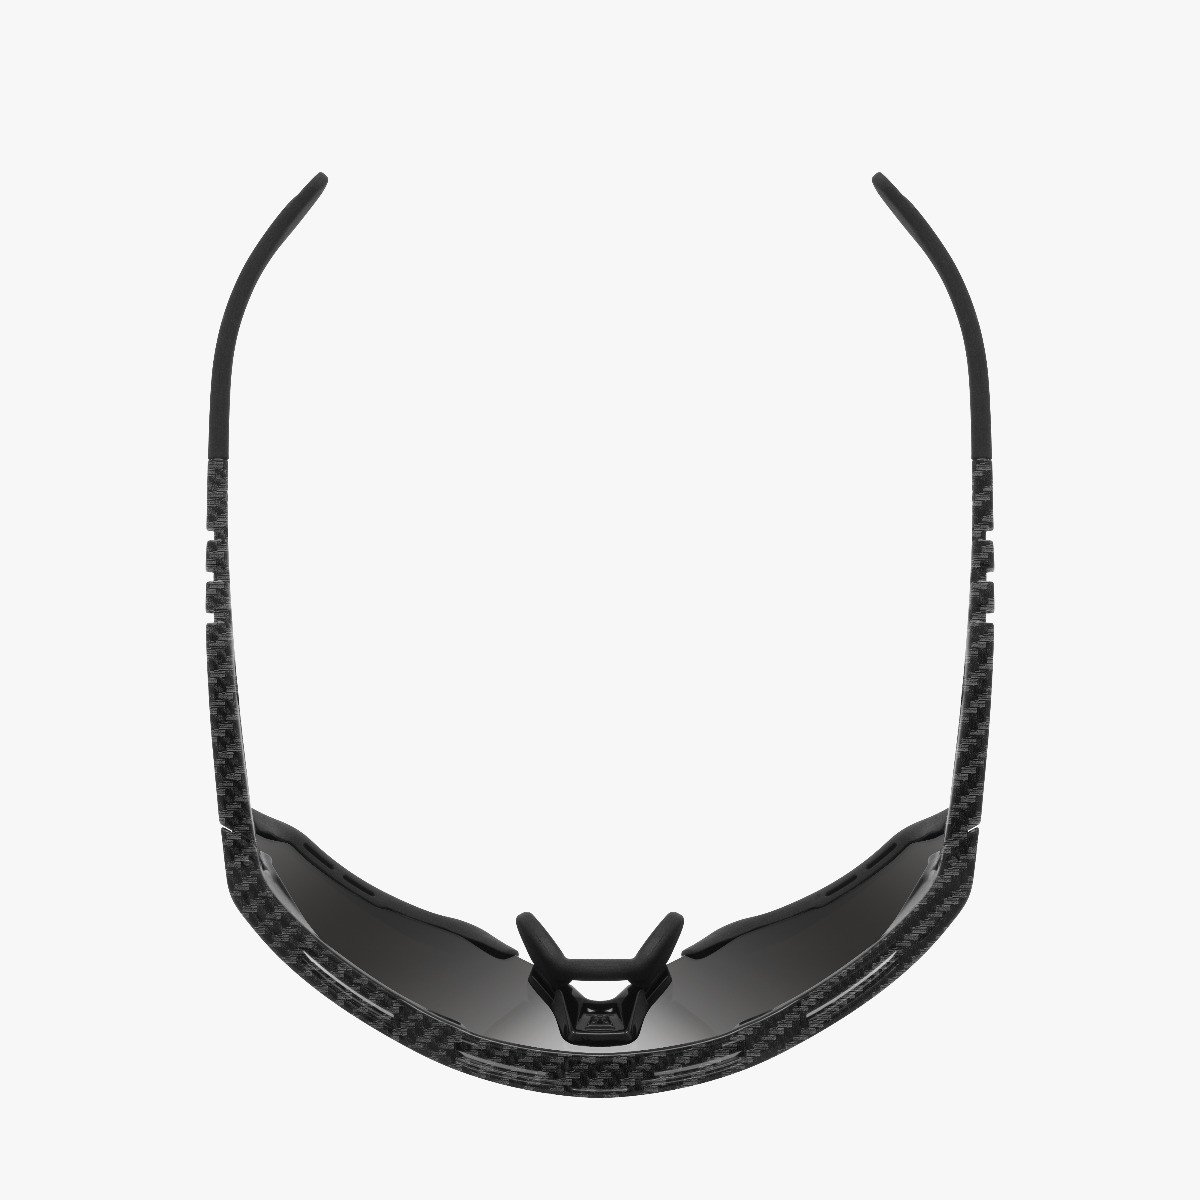 Scicon Sports | Aeroshade XL Carbon Cycling Sunglasses - Carbon Matt / Multimirror Silver - EY25081201
